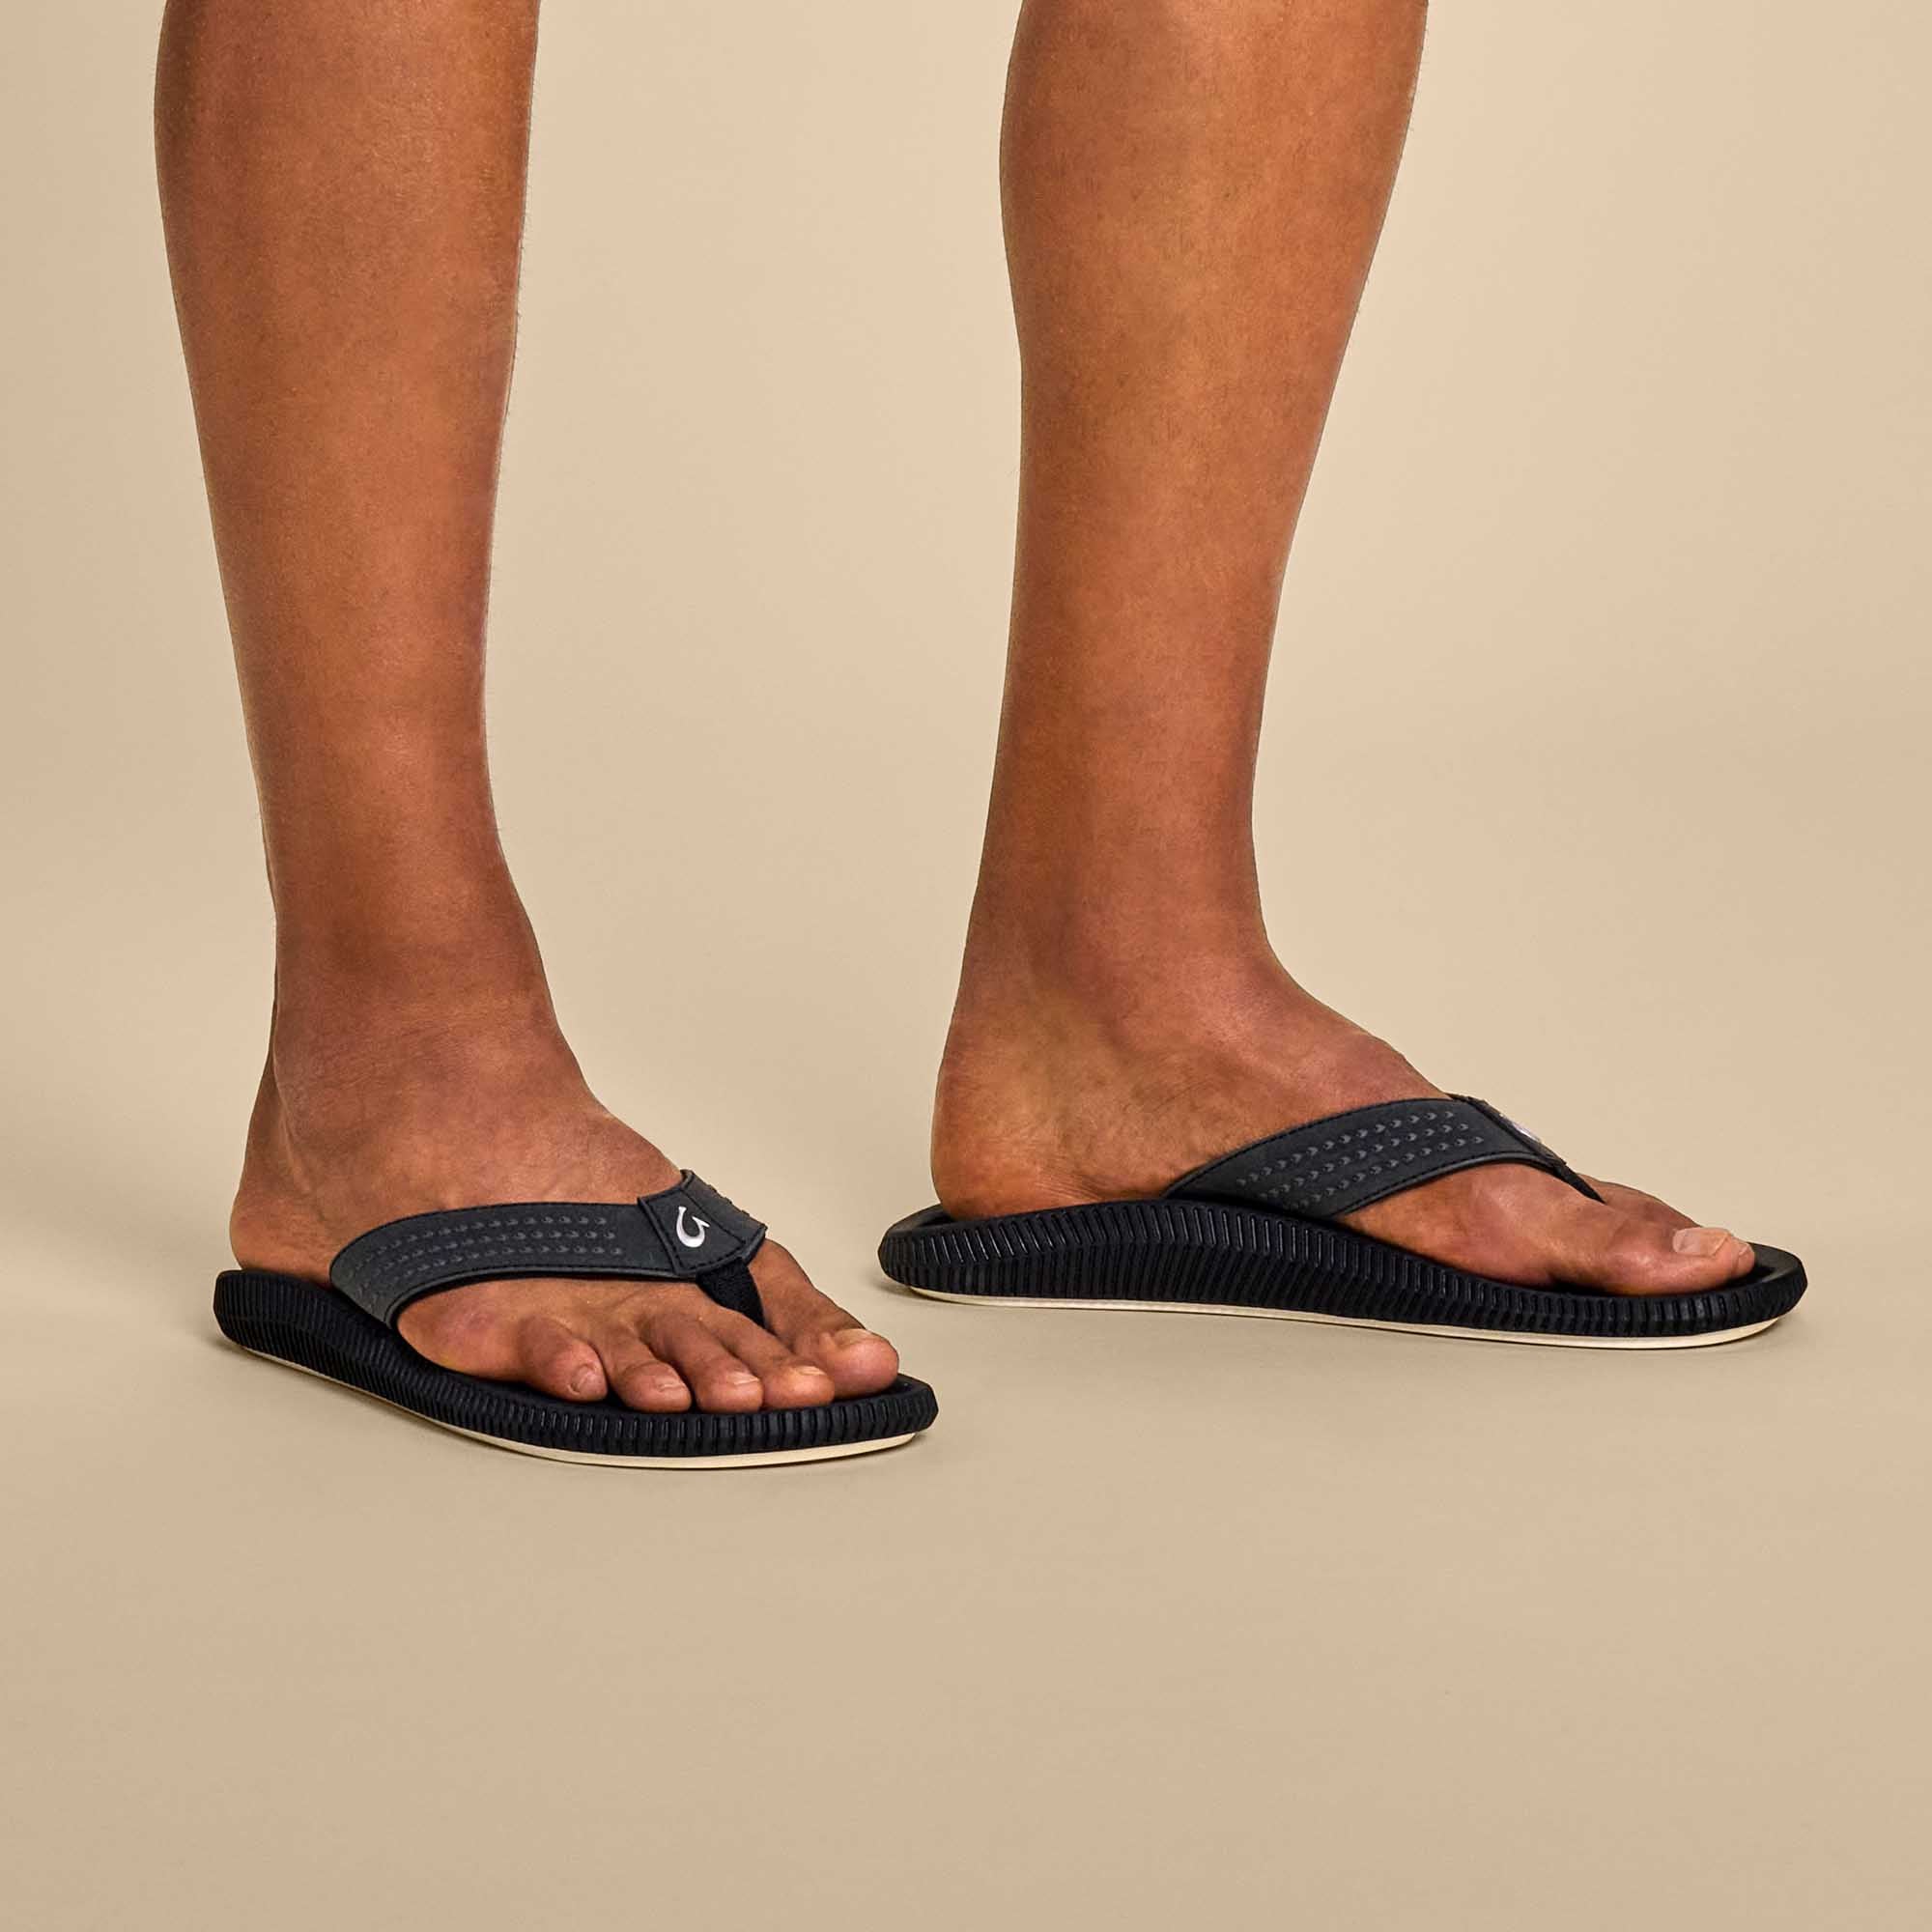  OLUKAI 'Ilikai Men's Leather Sandals, Full-Grain Leather Flip-Flop  Slides, Anatomical Footbed & Cushioning, Comfort Fit & Wet Grip Rubber,  Charcoal/Charcoal, 7